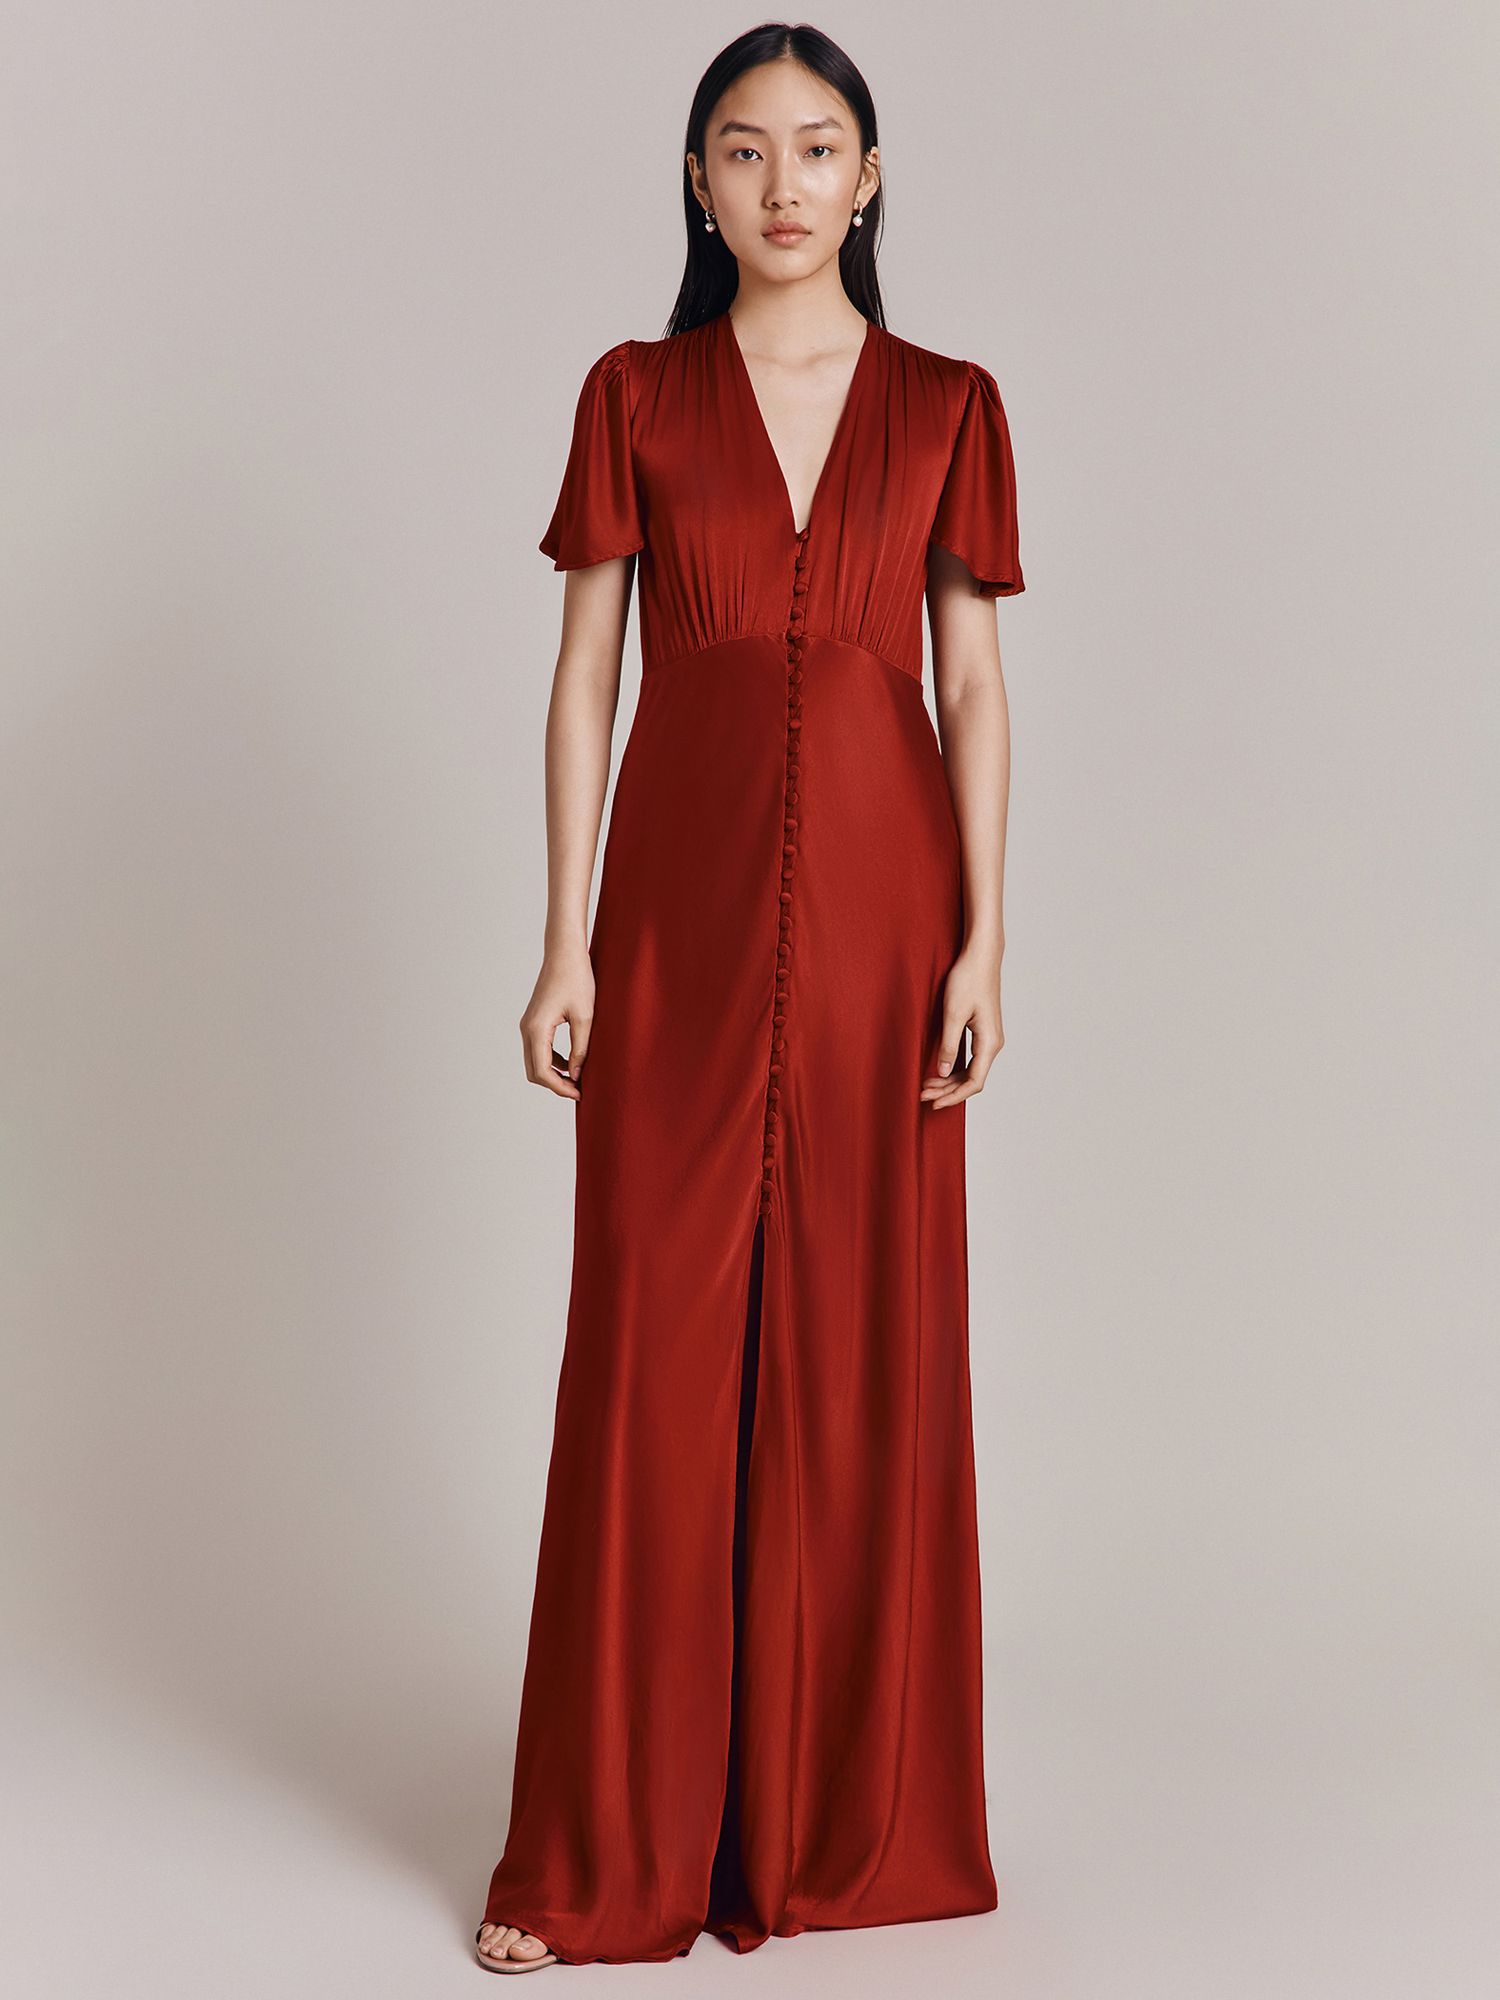 Ghost Delphine Bias Cut Satin Maxi Dress, Red, XXS